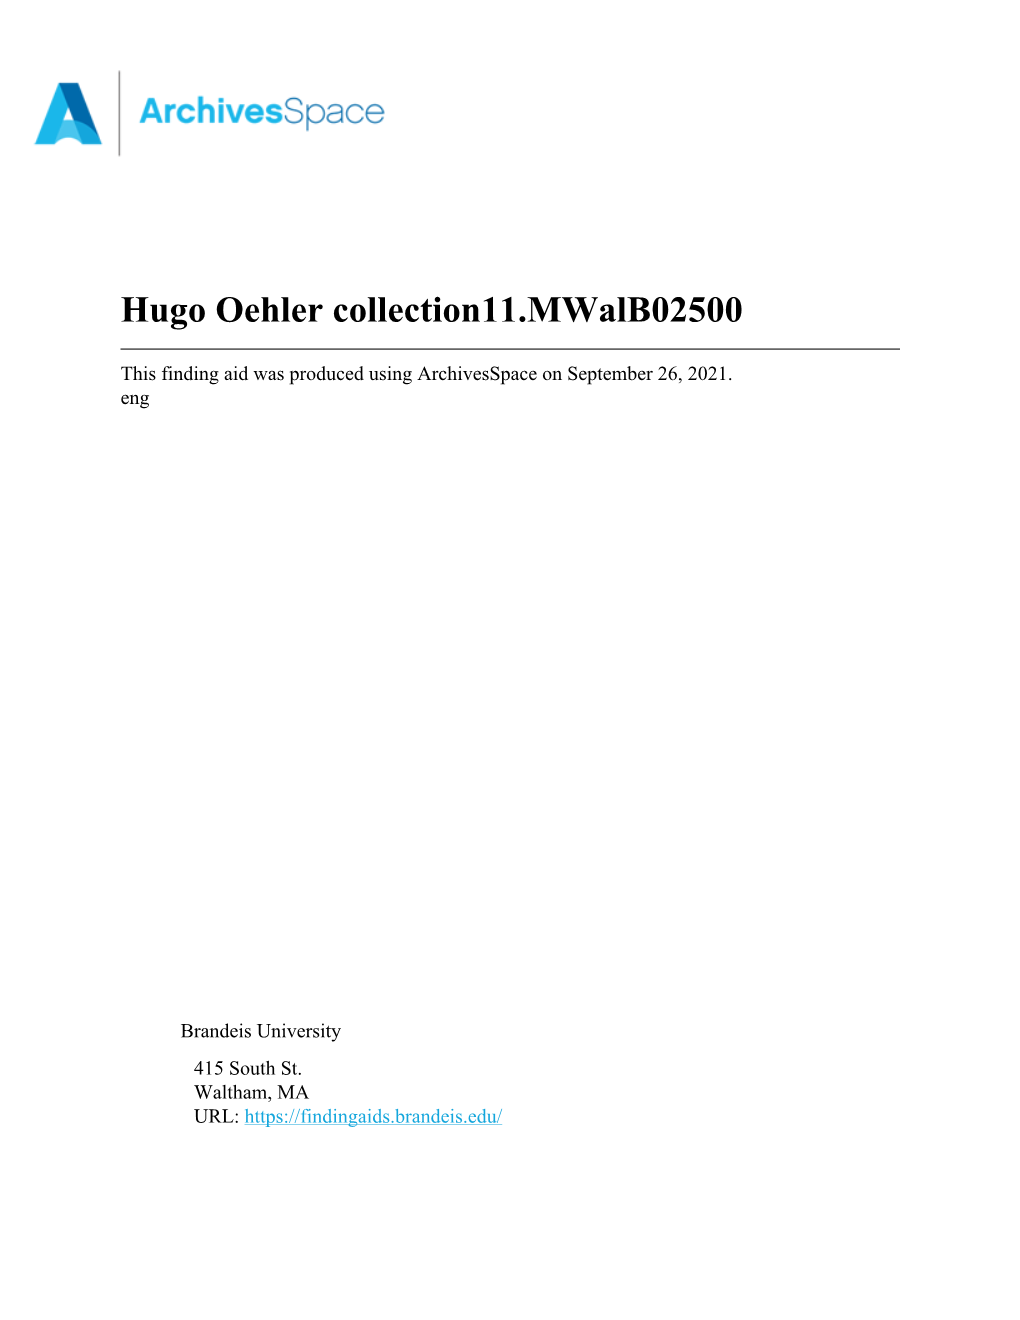 Hugo Oehler Collection11.Mwalb02500